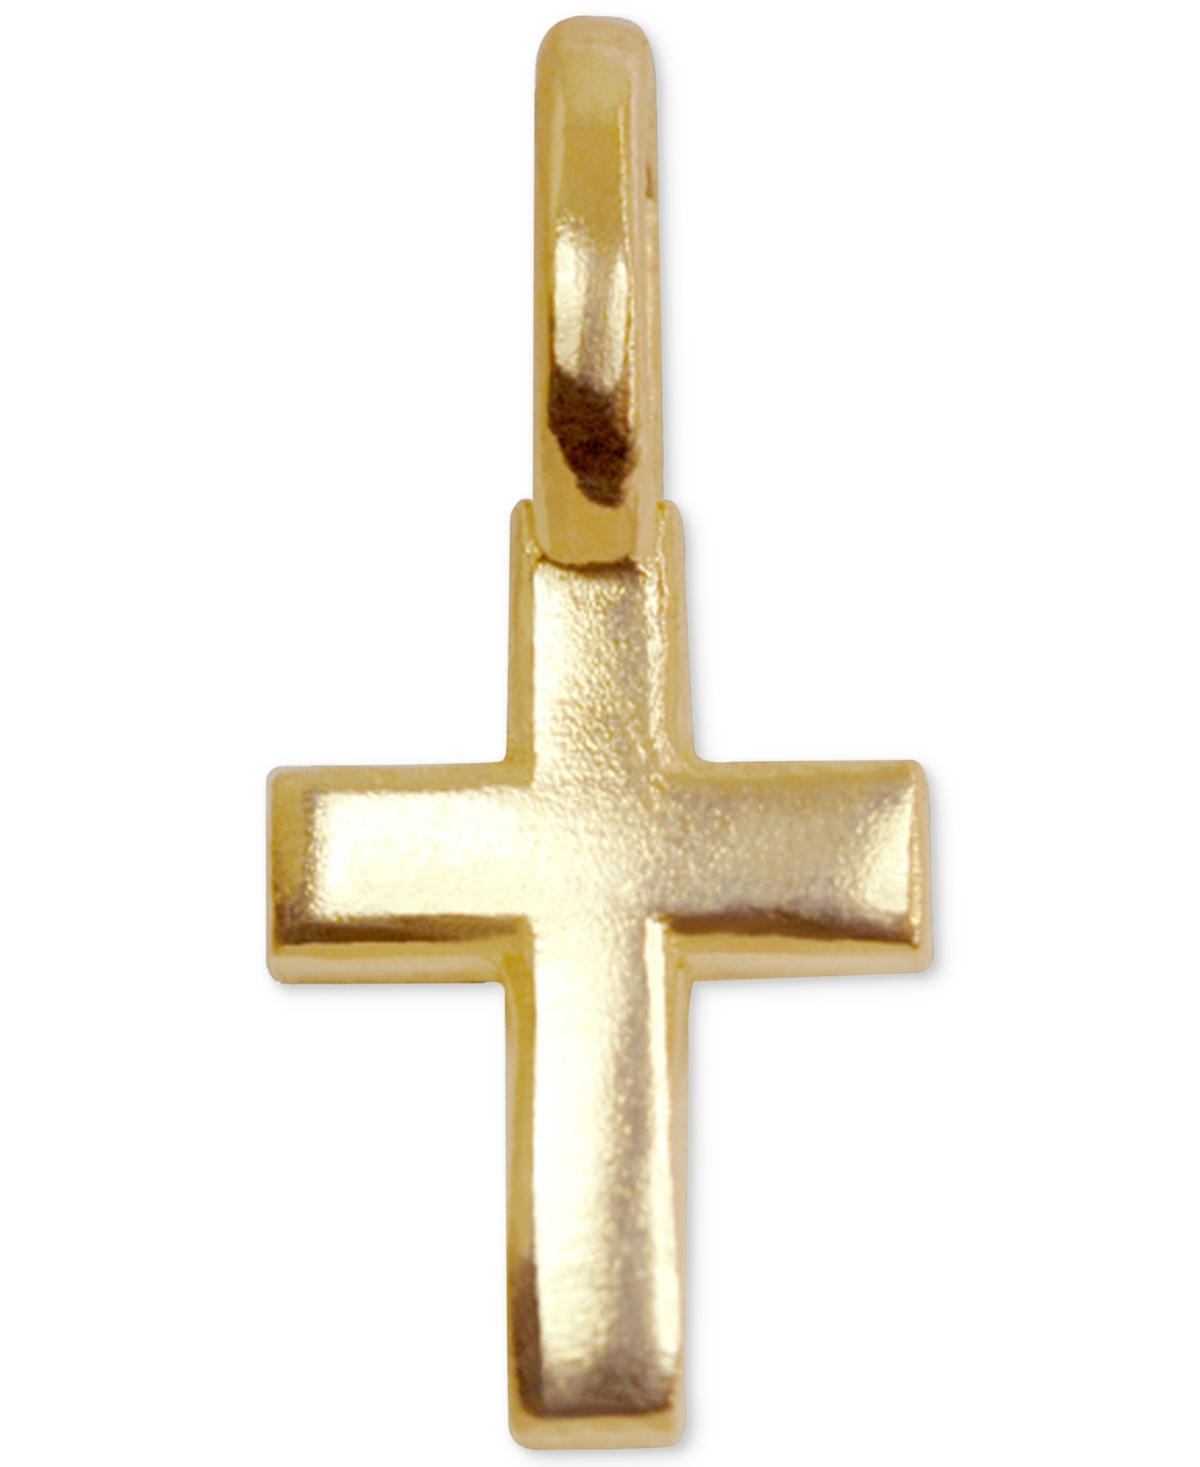 Mini Cross Charm in 14k Gold - Yellow Gold